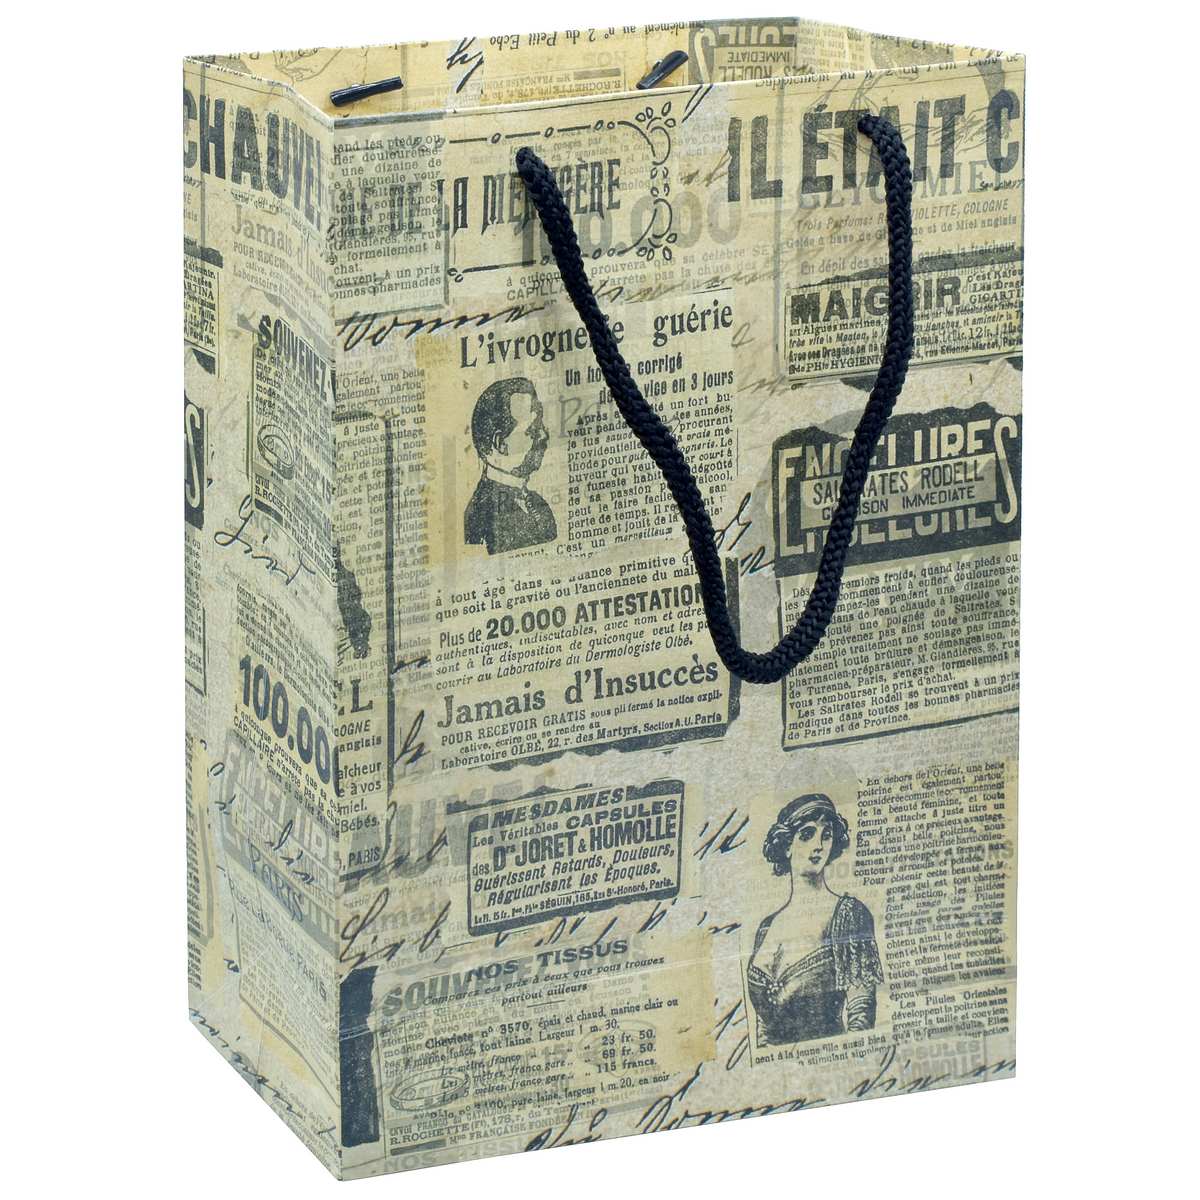 jags-mumbai Bag Jags Paper Bag Small Vintage Newspaper A5 JPBS04